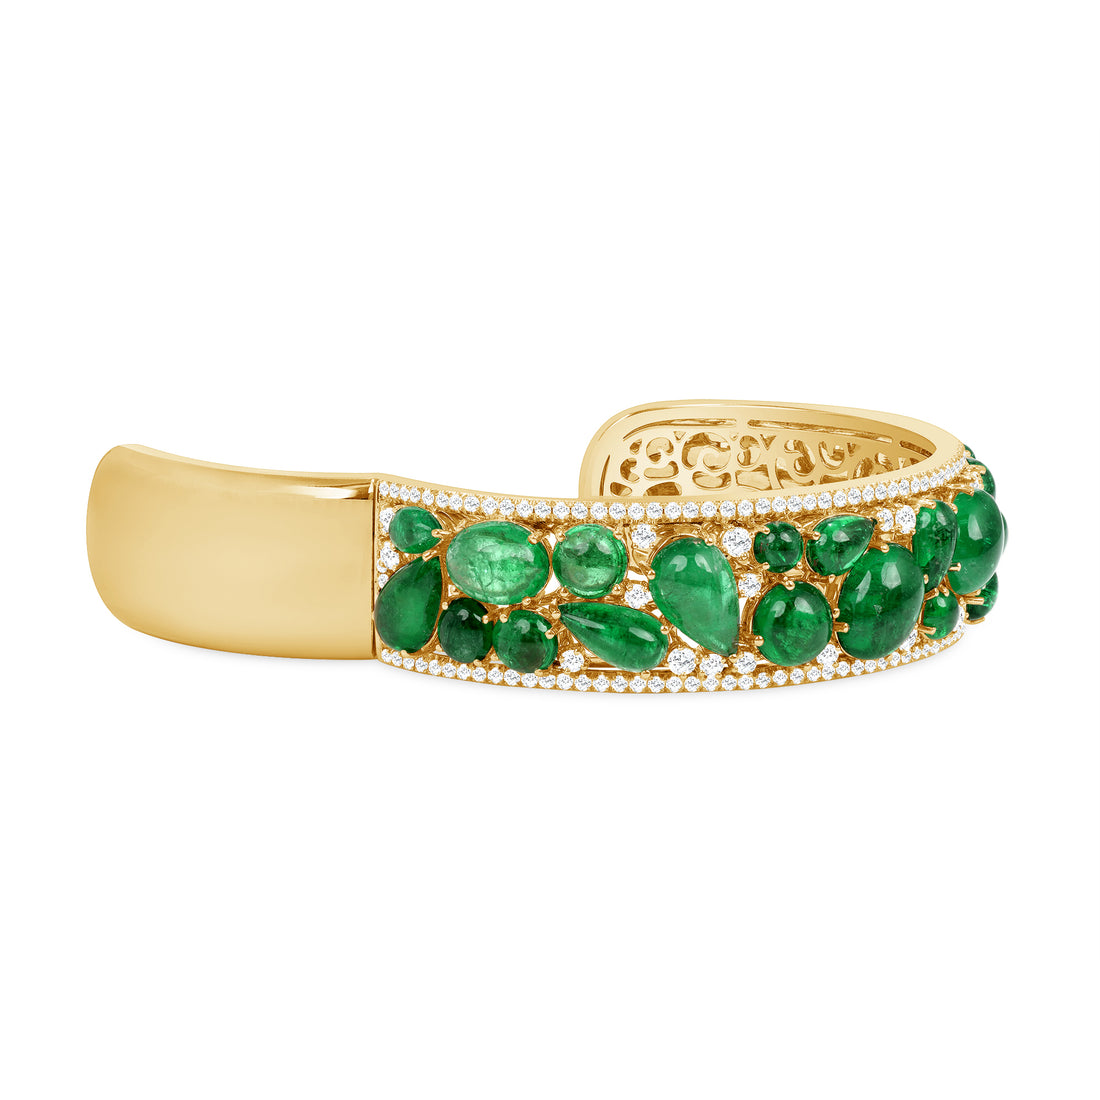 Round Brilliant Diamond and Mixed Cut Cabochon Emerald Cuff Bracelet